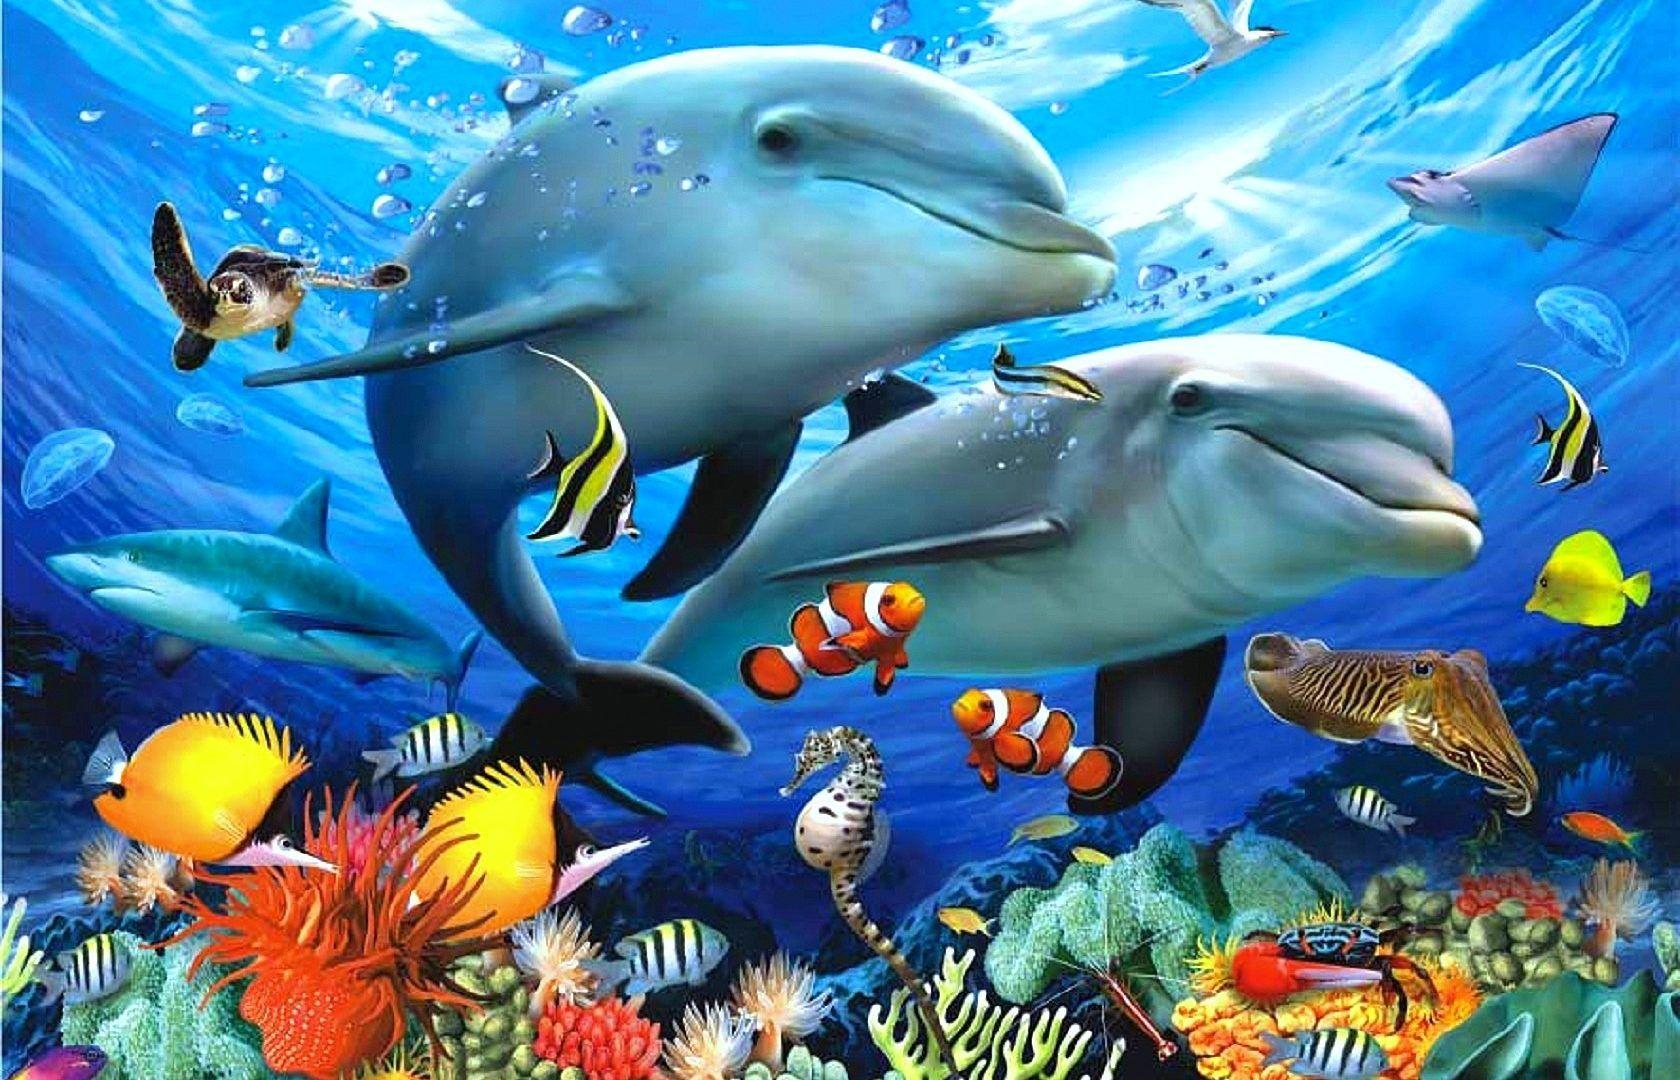 Oceans: Life Animals Beneath Attractions Four Seasons Underwater